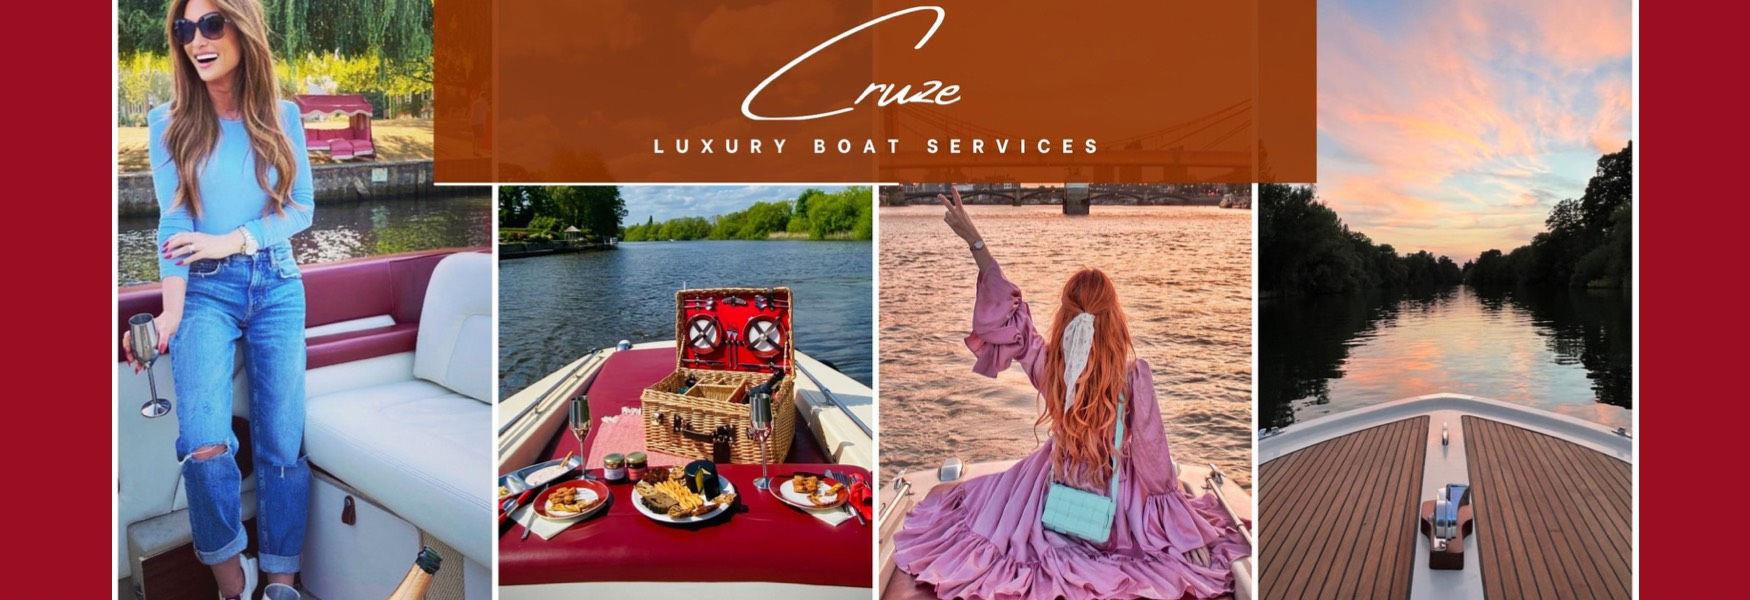 Cruze Luxury Boat Services